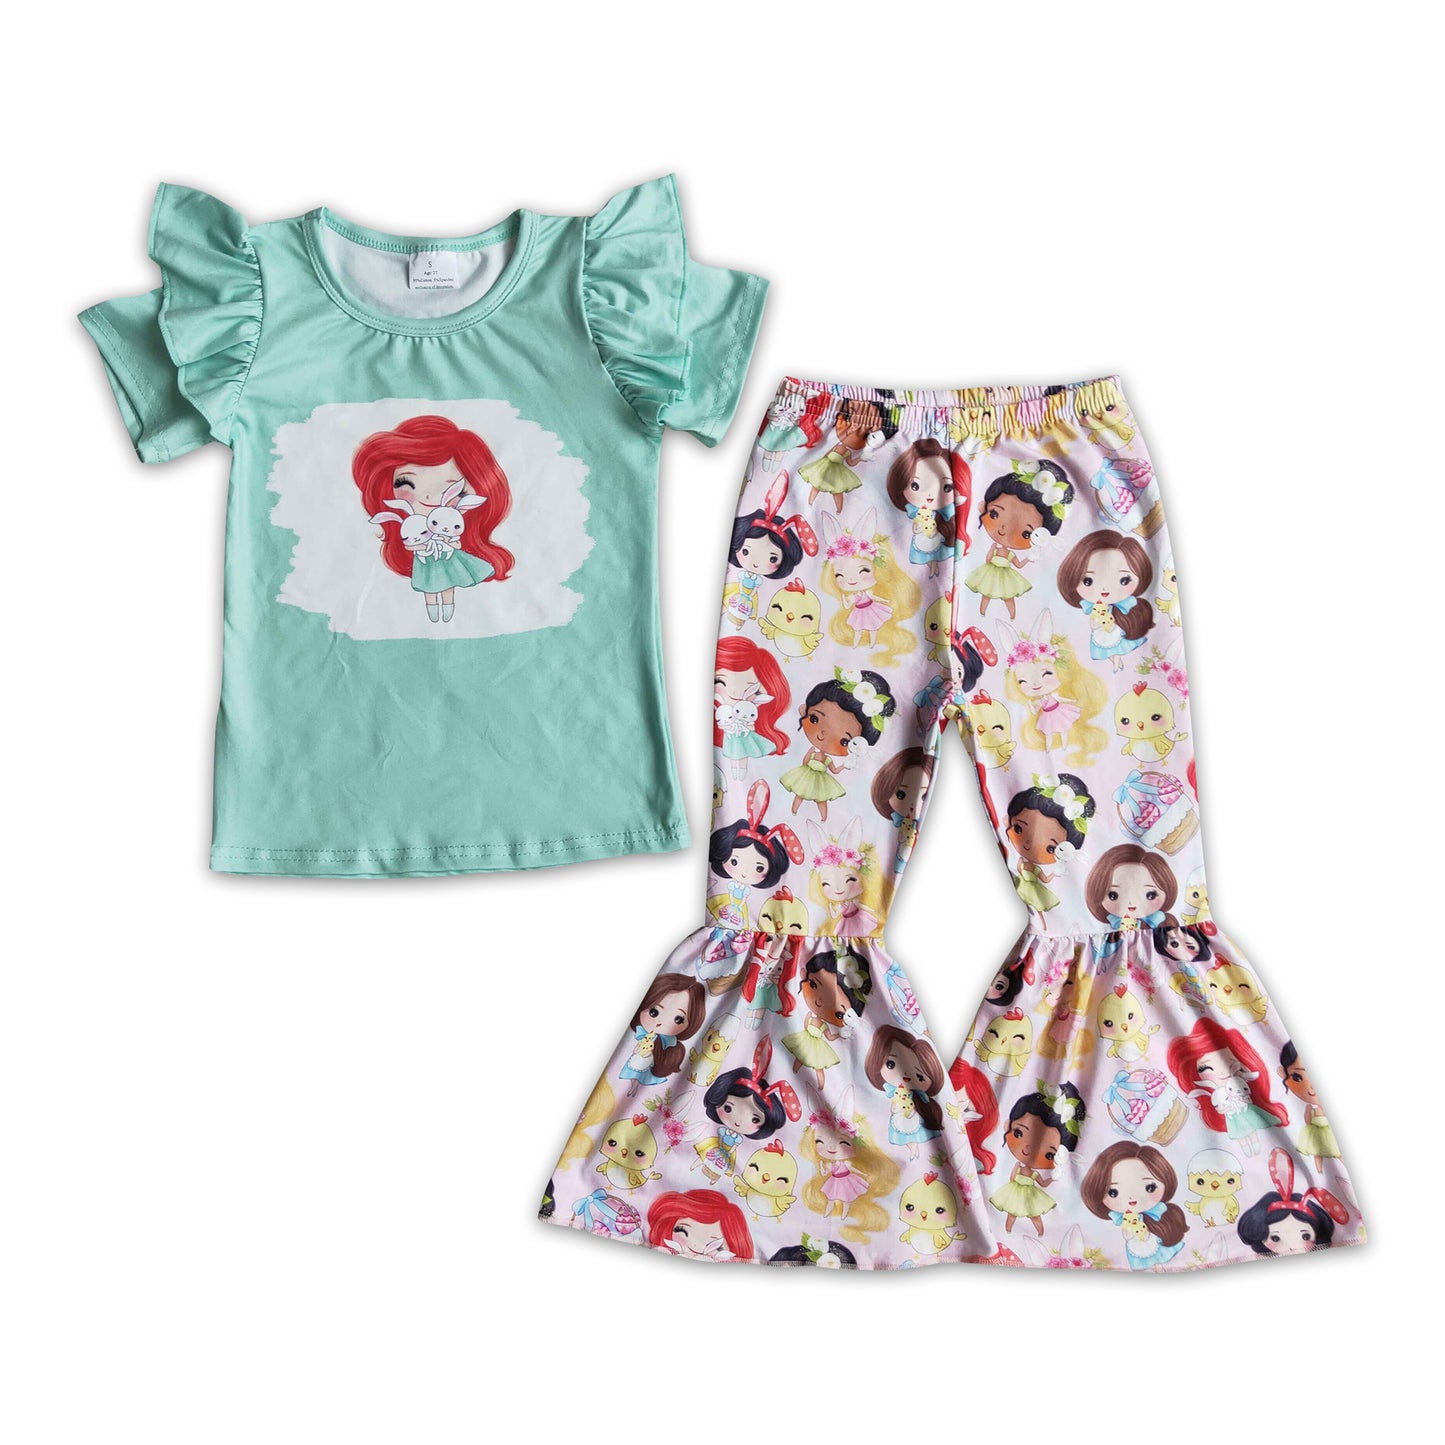 Princess bunny print baby girls princess easter clothing set